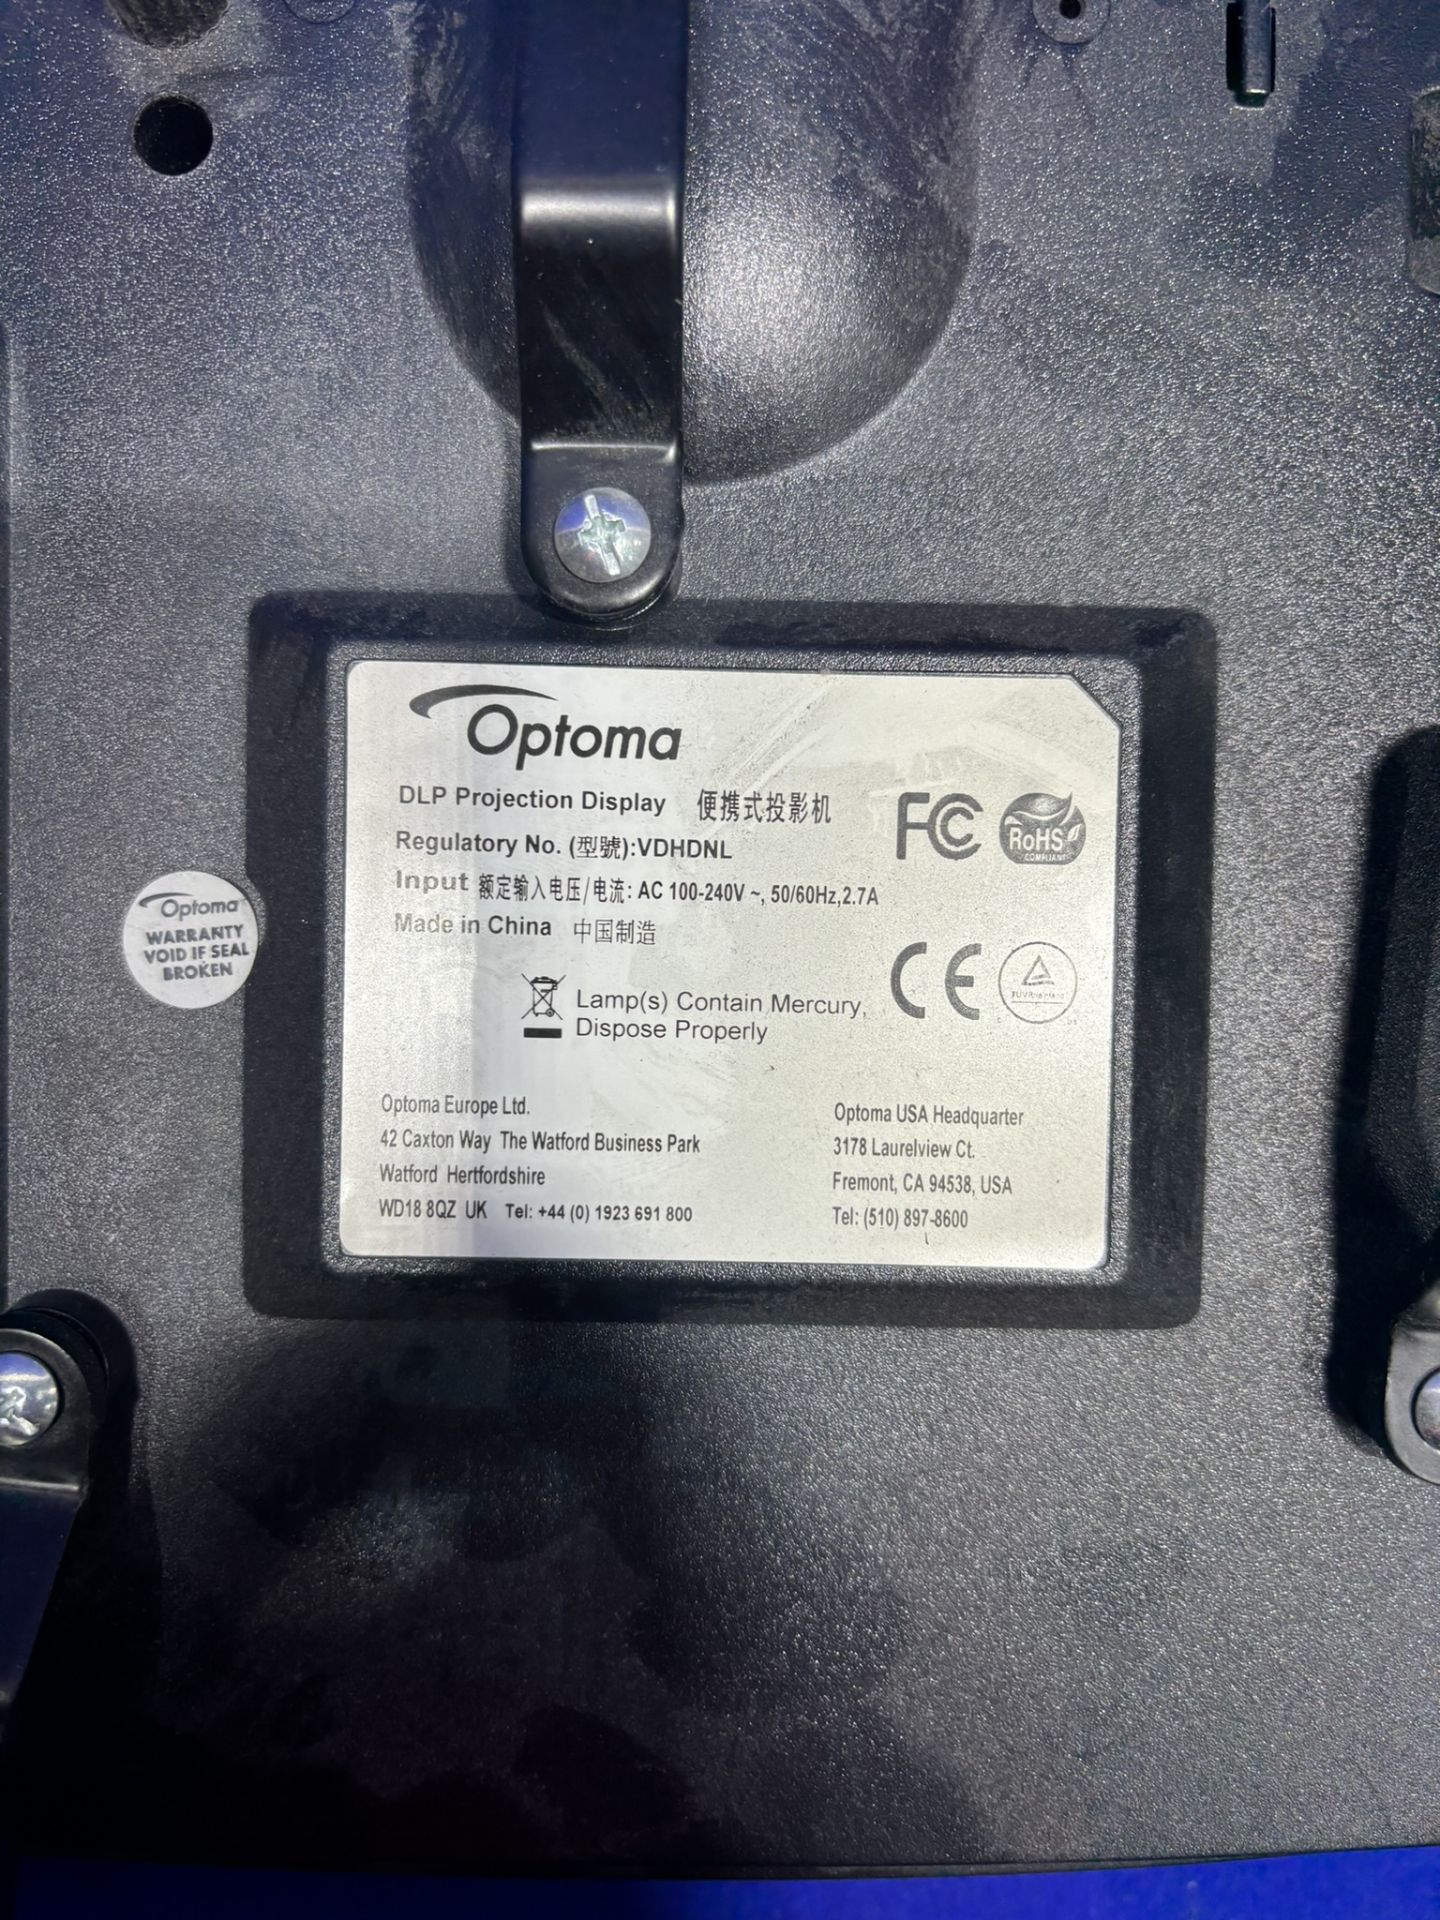 Optoma VDHDNL HDMI DLP Projector - Image 7 of 8